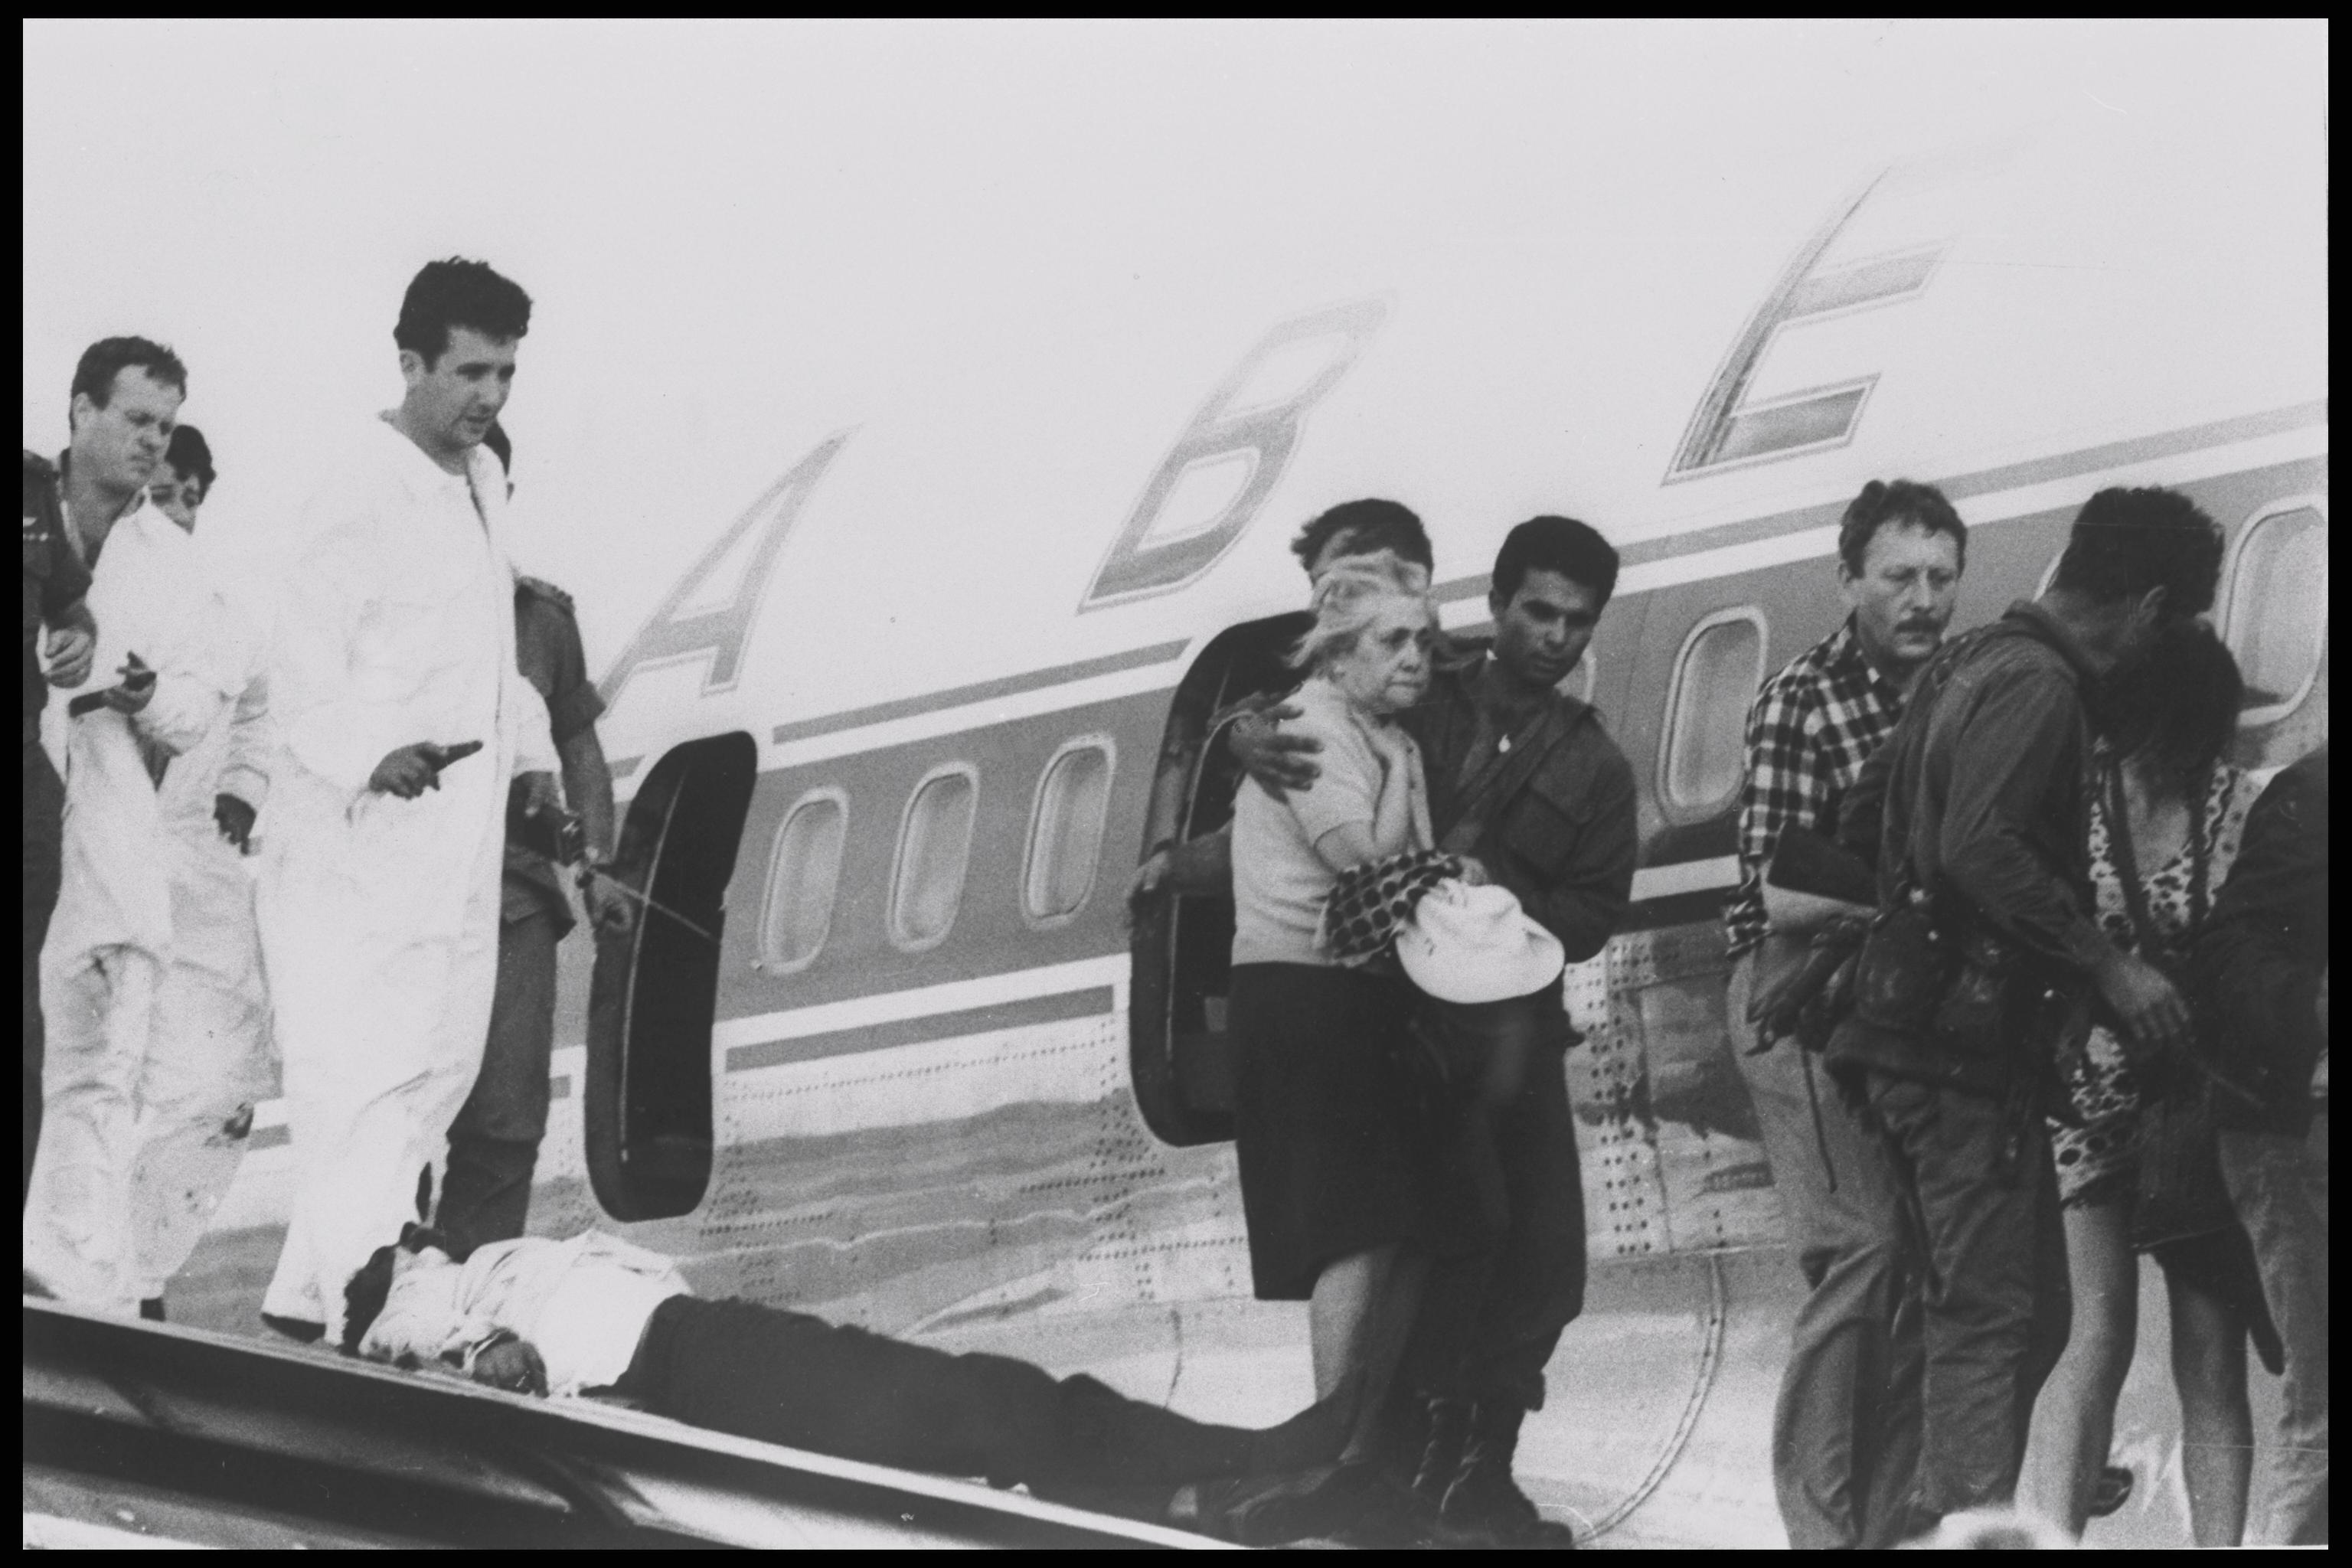 <p>חיילי צה"ל מסיירת מטכ"ל בפעולה צבאית נועזת מחלצים חטופים מידי מחבלים אשר חטפו מטוס של חברת התעופה "סבנה", בנמל התעופה לוד. משמאל לימין, דני יתום ואהוד ברק חיילי צה"ל אשר השתתפו בפעולת חילוץ החטופים מידי המחבלים, 9.5.1972. צילום: רון אילן, אוסף התצלומים הלאומי</p>
<p><span style="color: #3a4249; font-family: 'Trebuchet MS', Arial, Helvetica, sans-serif; font-size: 12px; background-color: #f4f4f4;">&nbsp;</span></p>